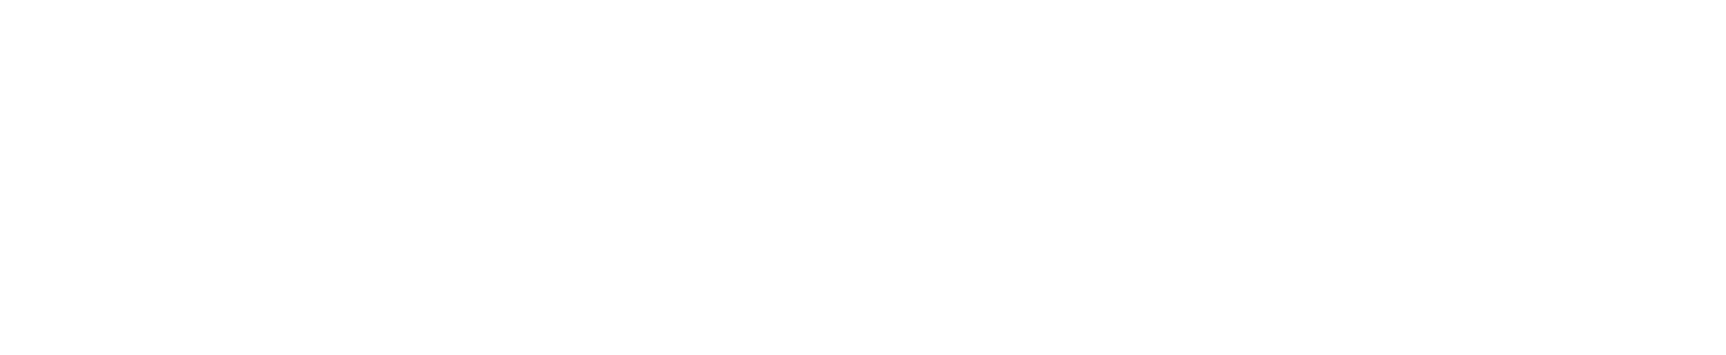 Stimulade Health & Nutrition logo-white